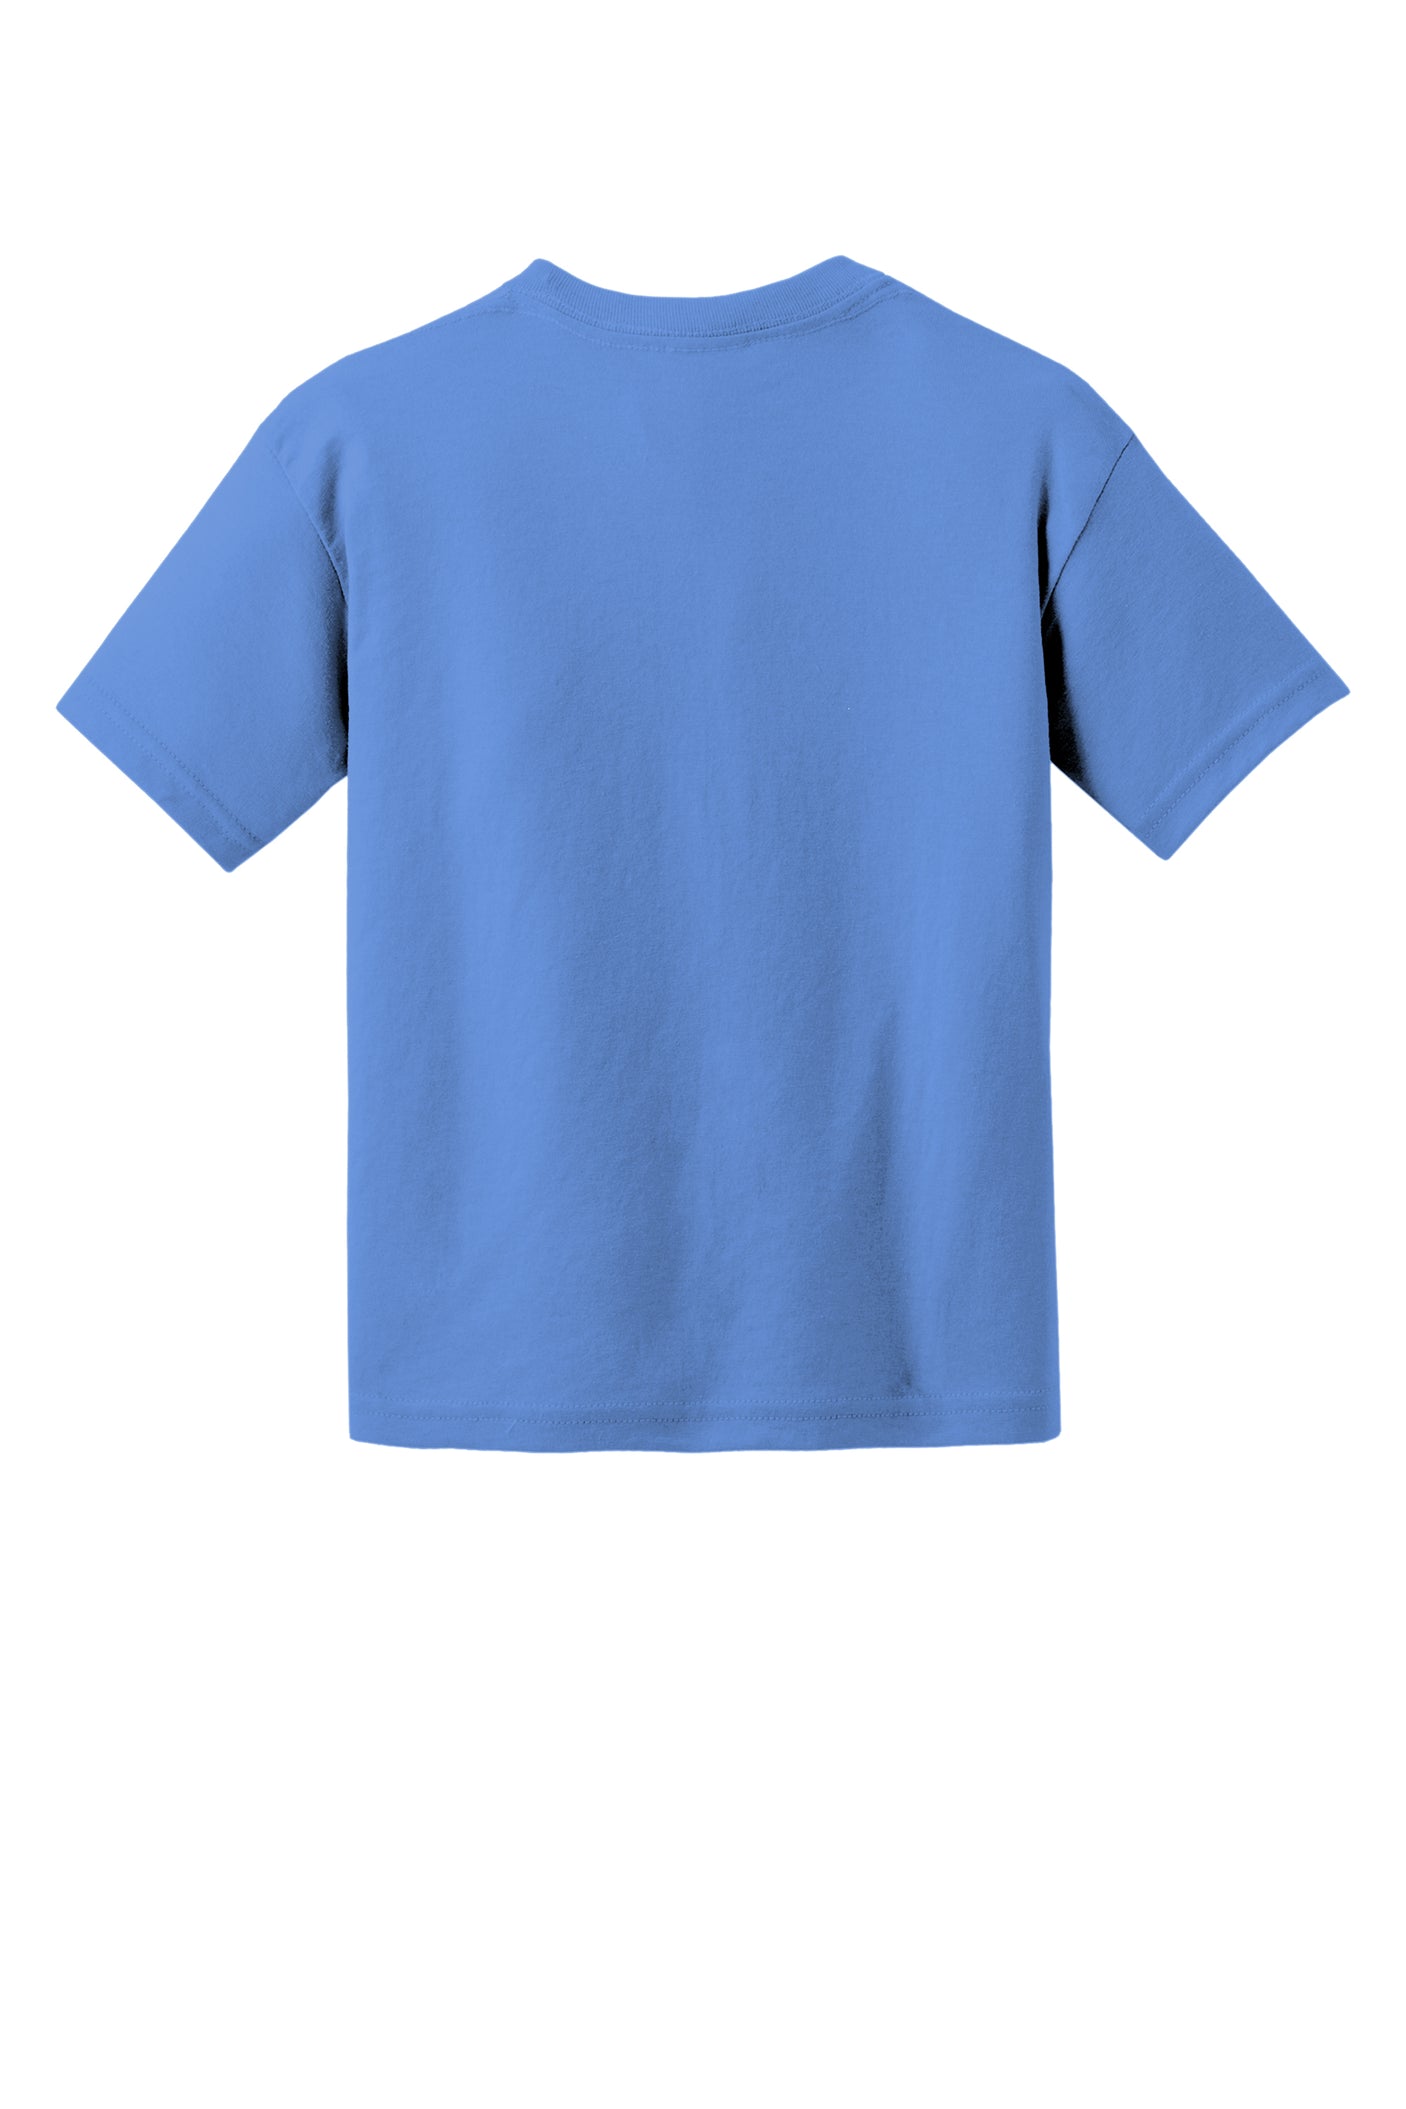 Gildan DryBlend® Youth Short Sleeve - Carolina Blue